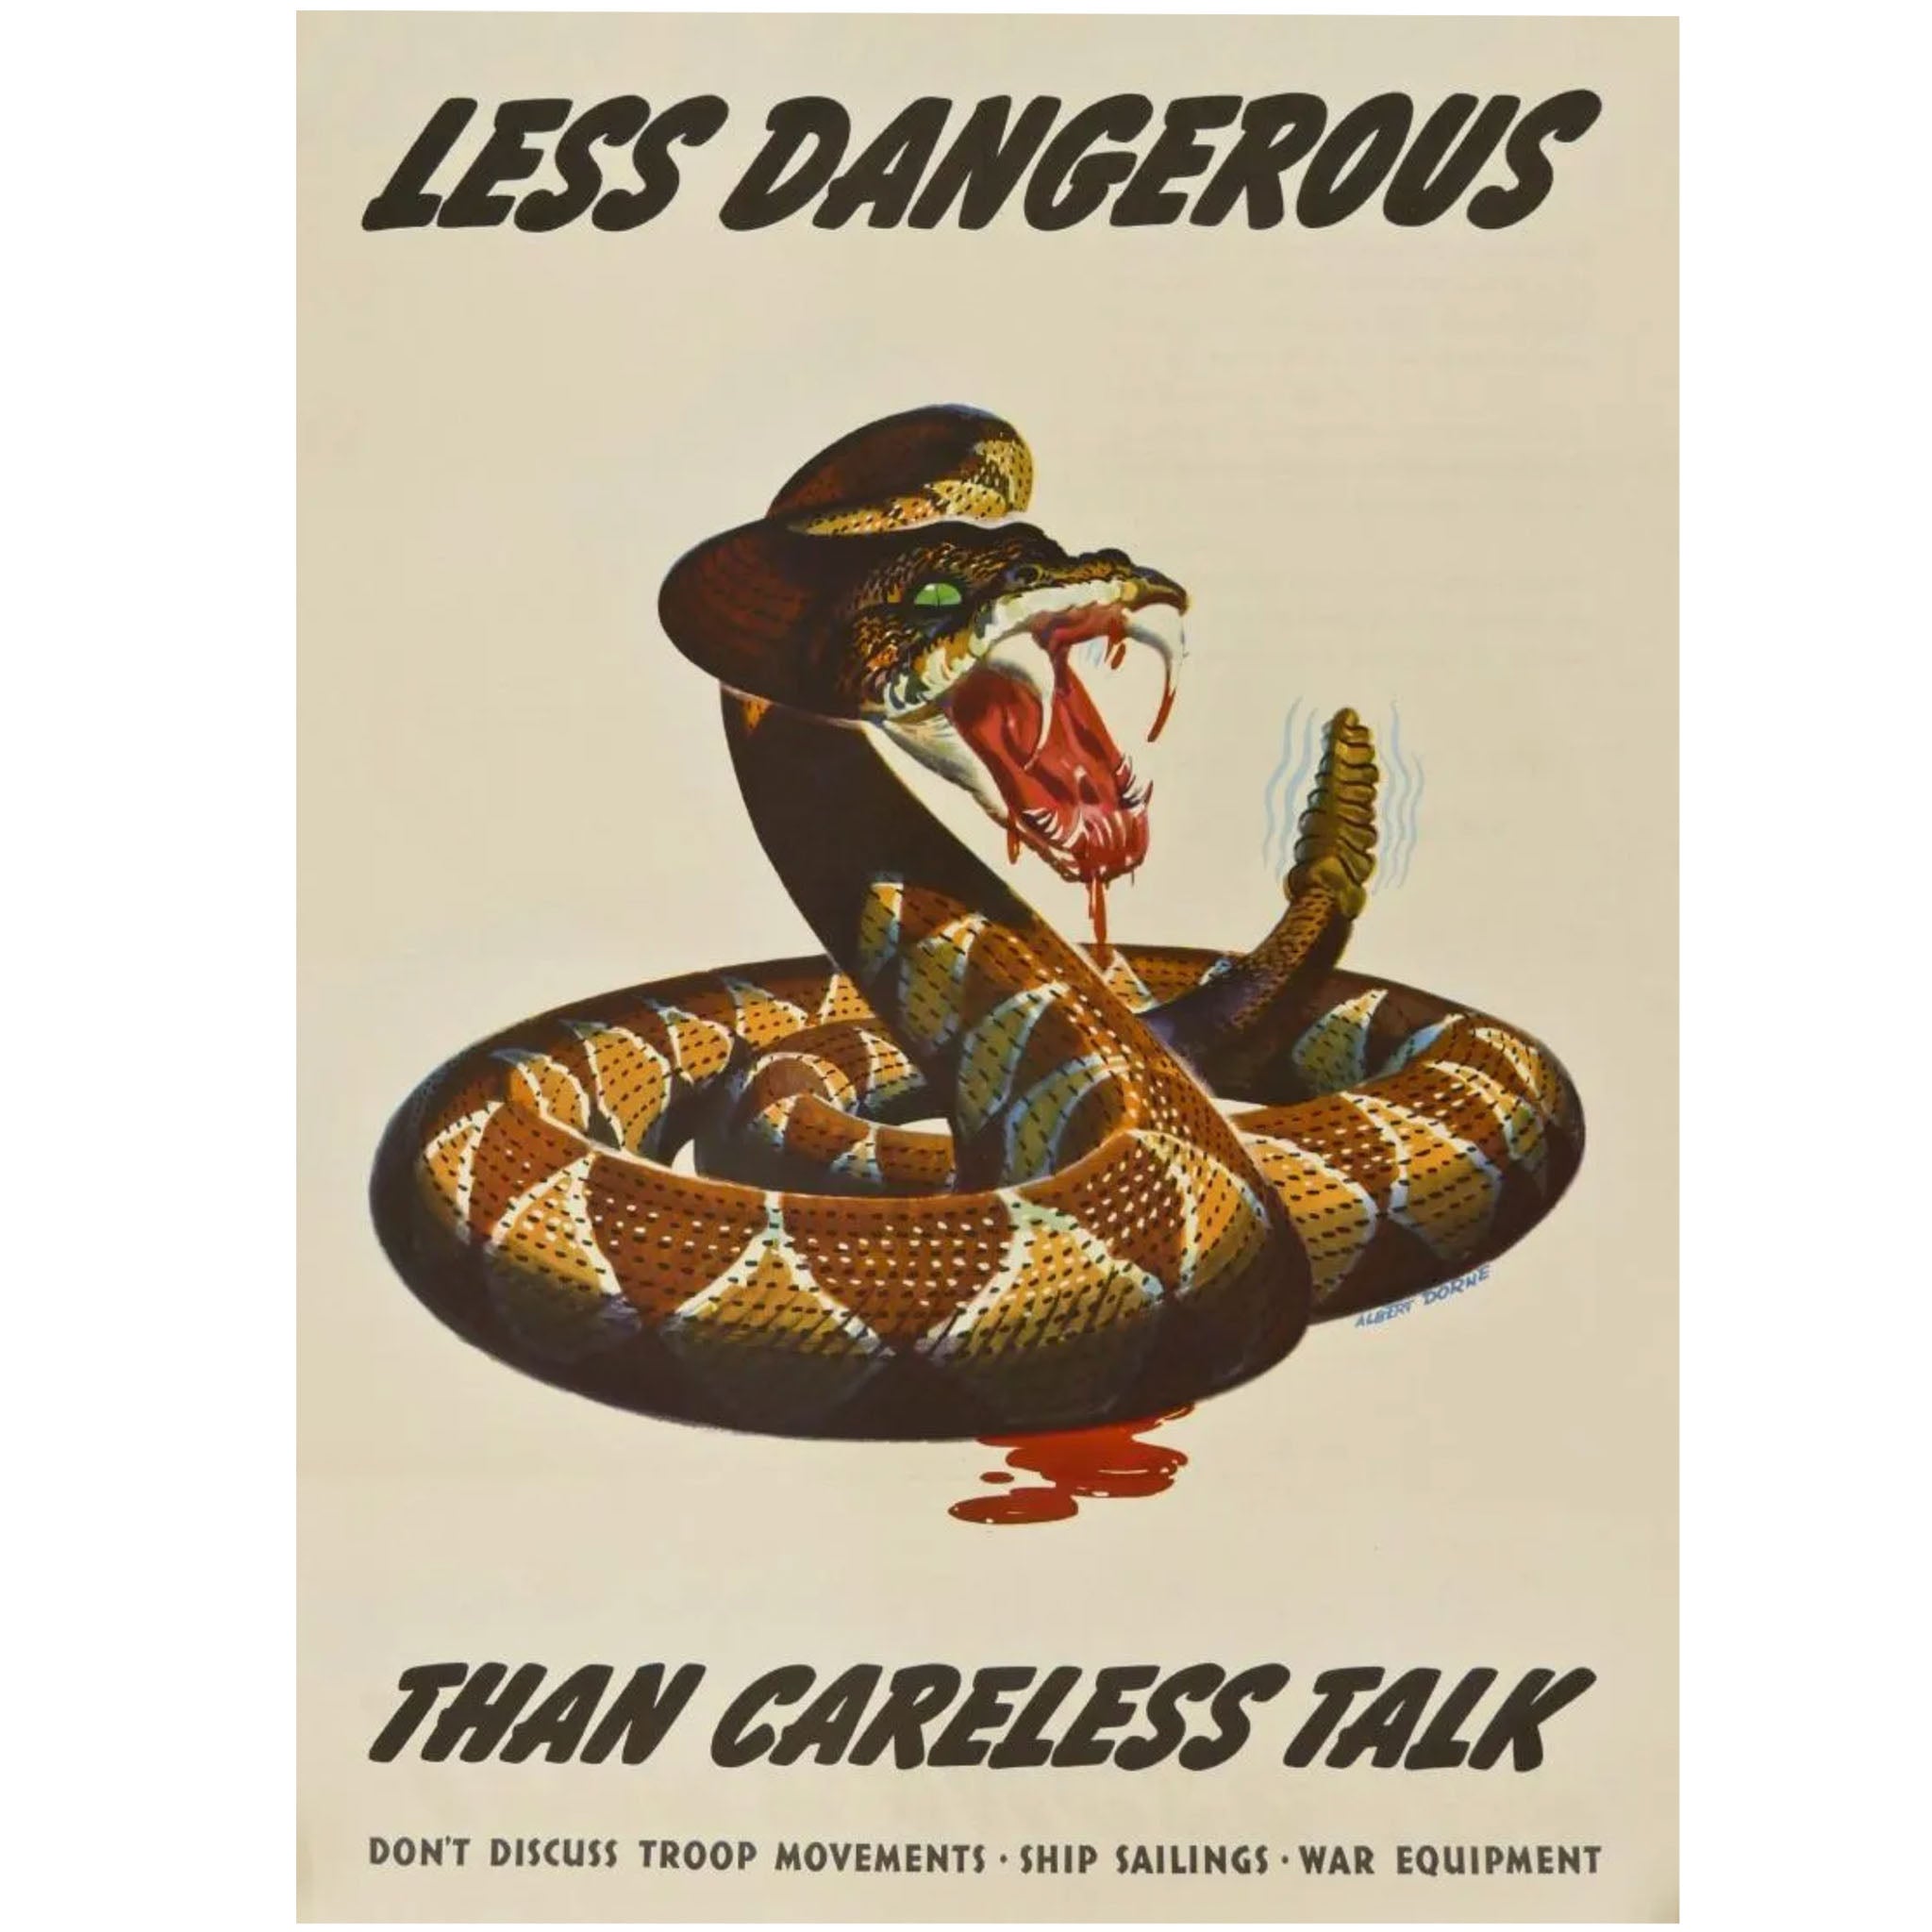 Less Dangerous Than Careless Talk WWII Original Poster